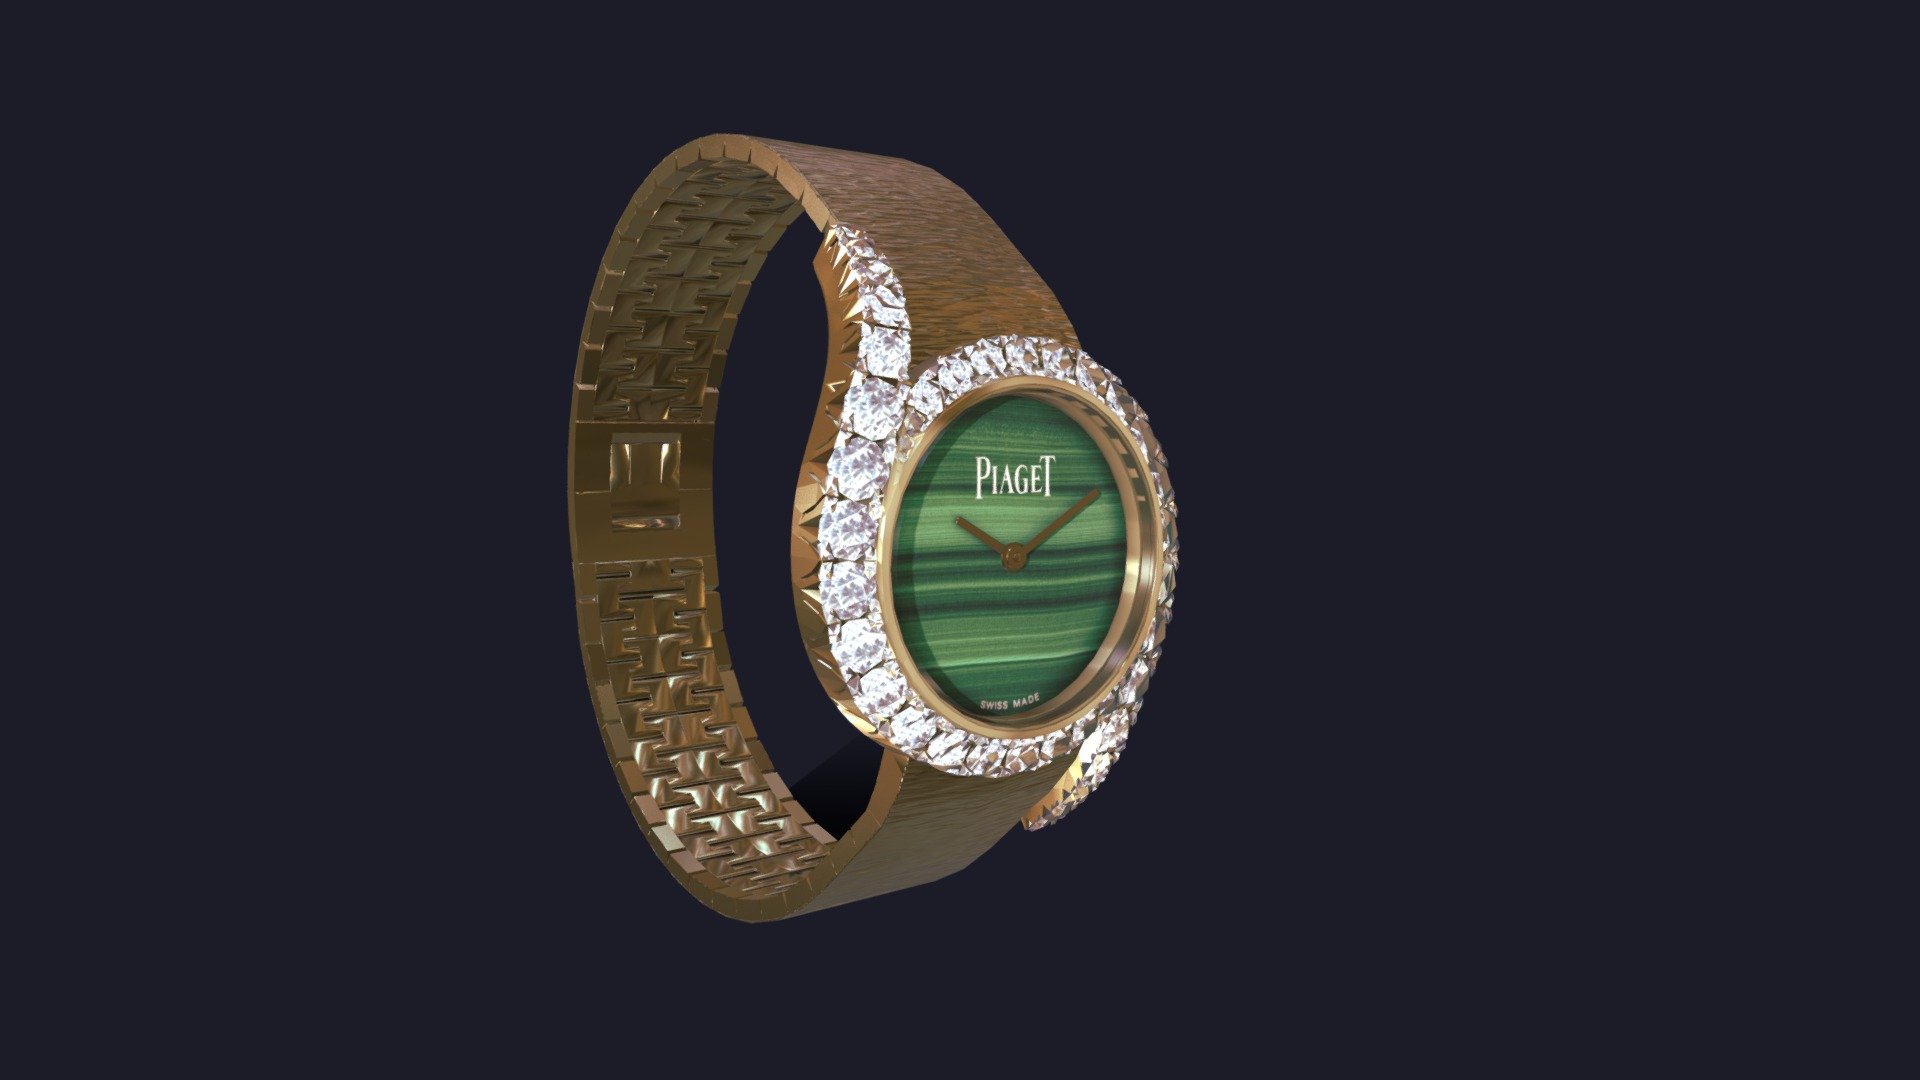 Piaget Gala malachite watch - 3D model by CemtrexVR 3d model